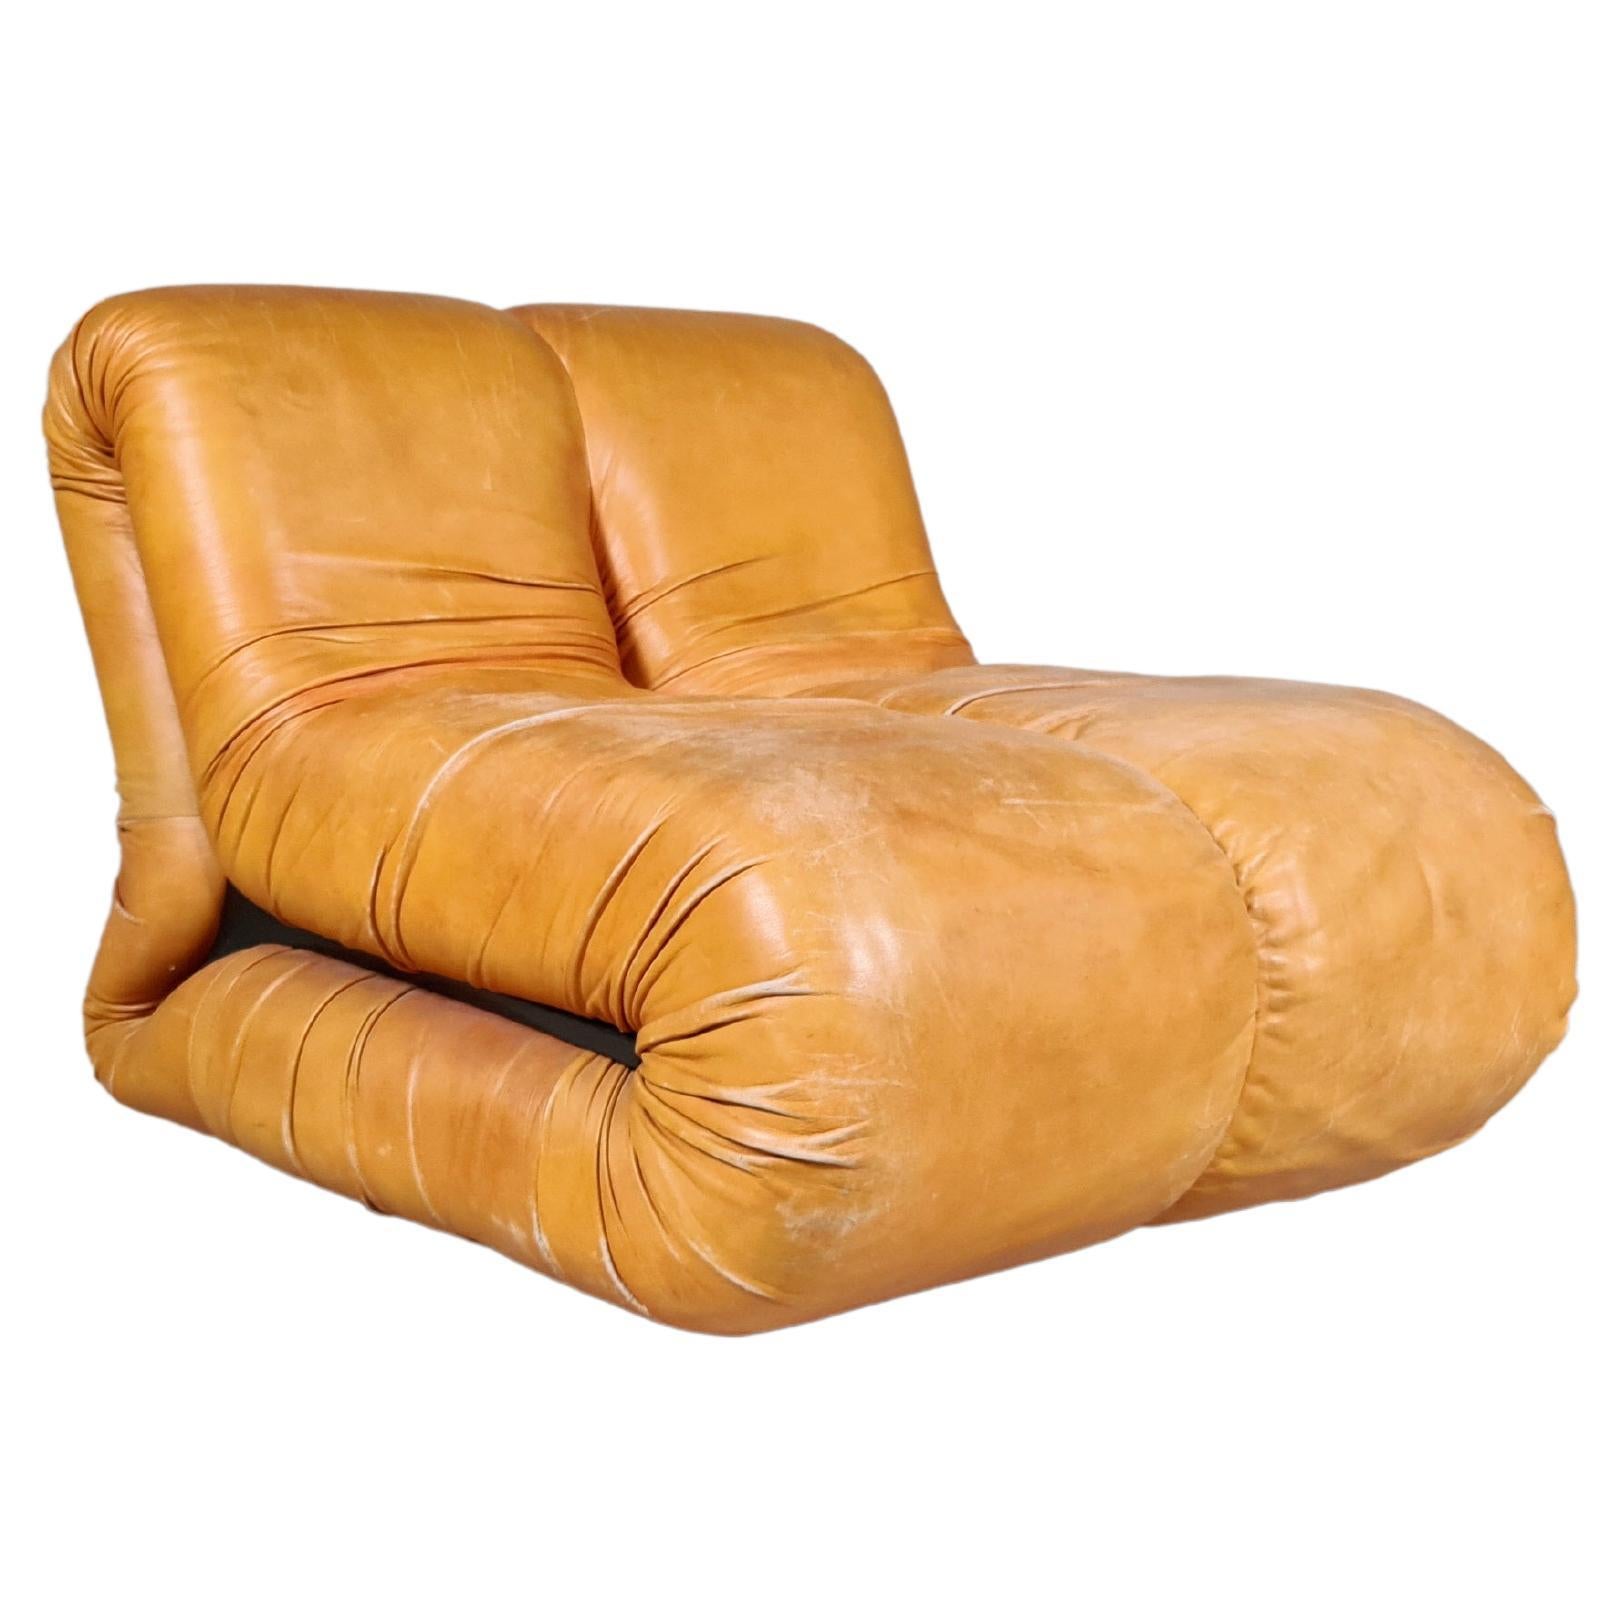 Claudio Vagnoni for 1P, 'Pagru' Lounge Chair in Original cognac Leather